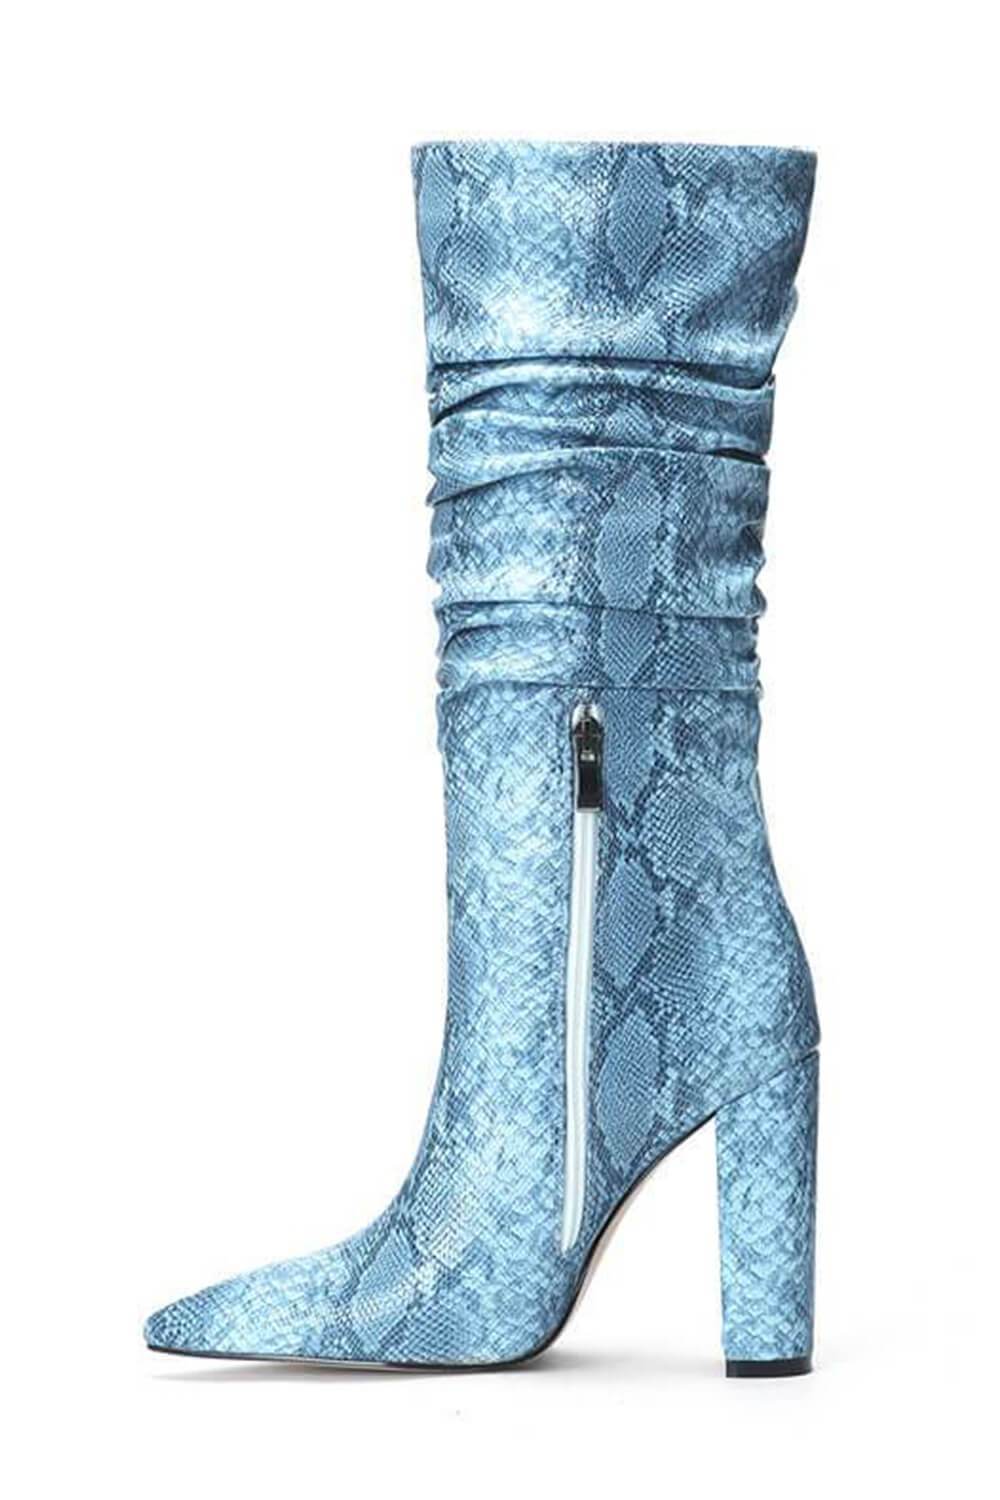 blue snakeskin boots